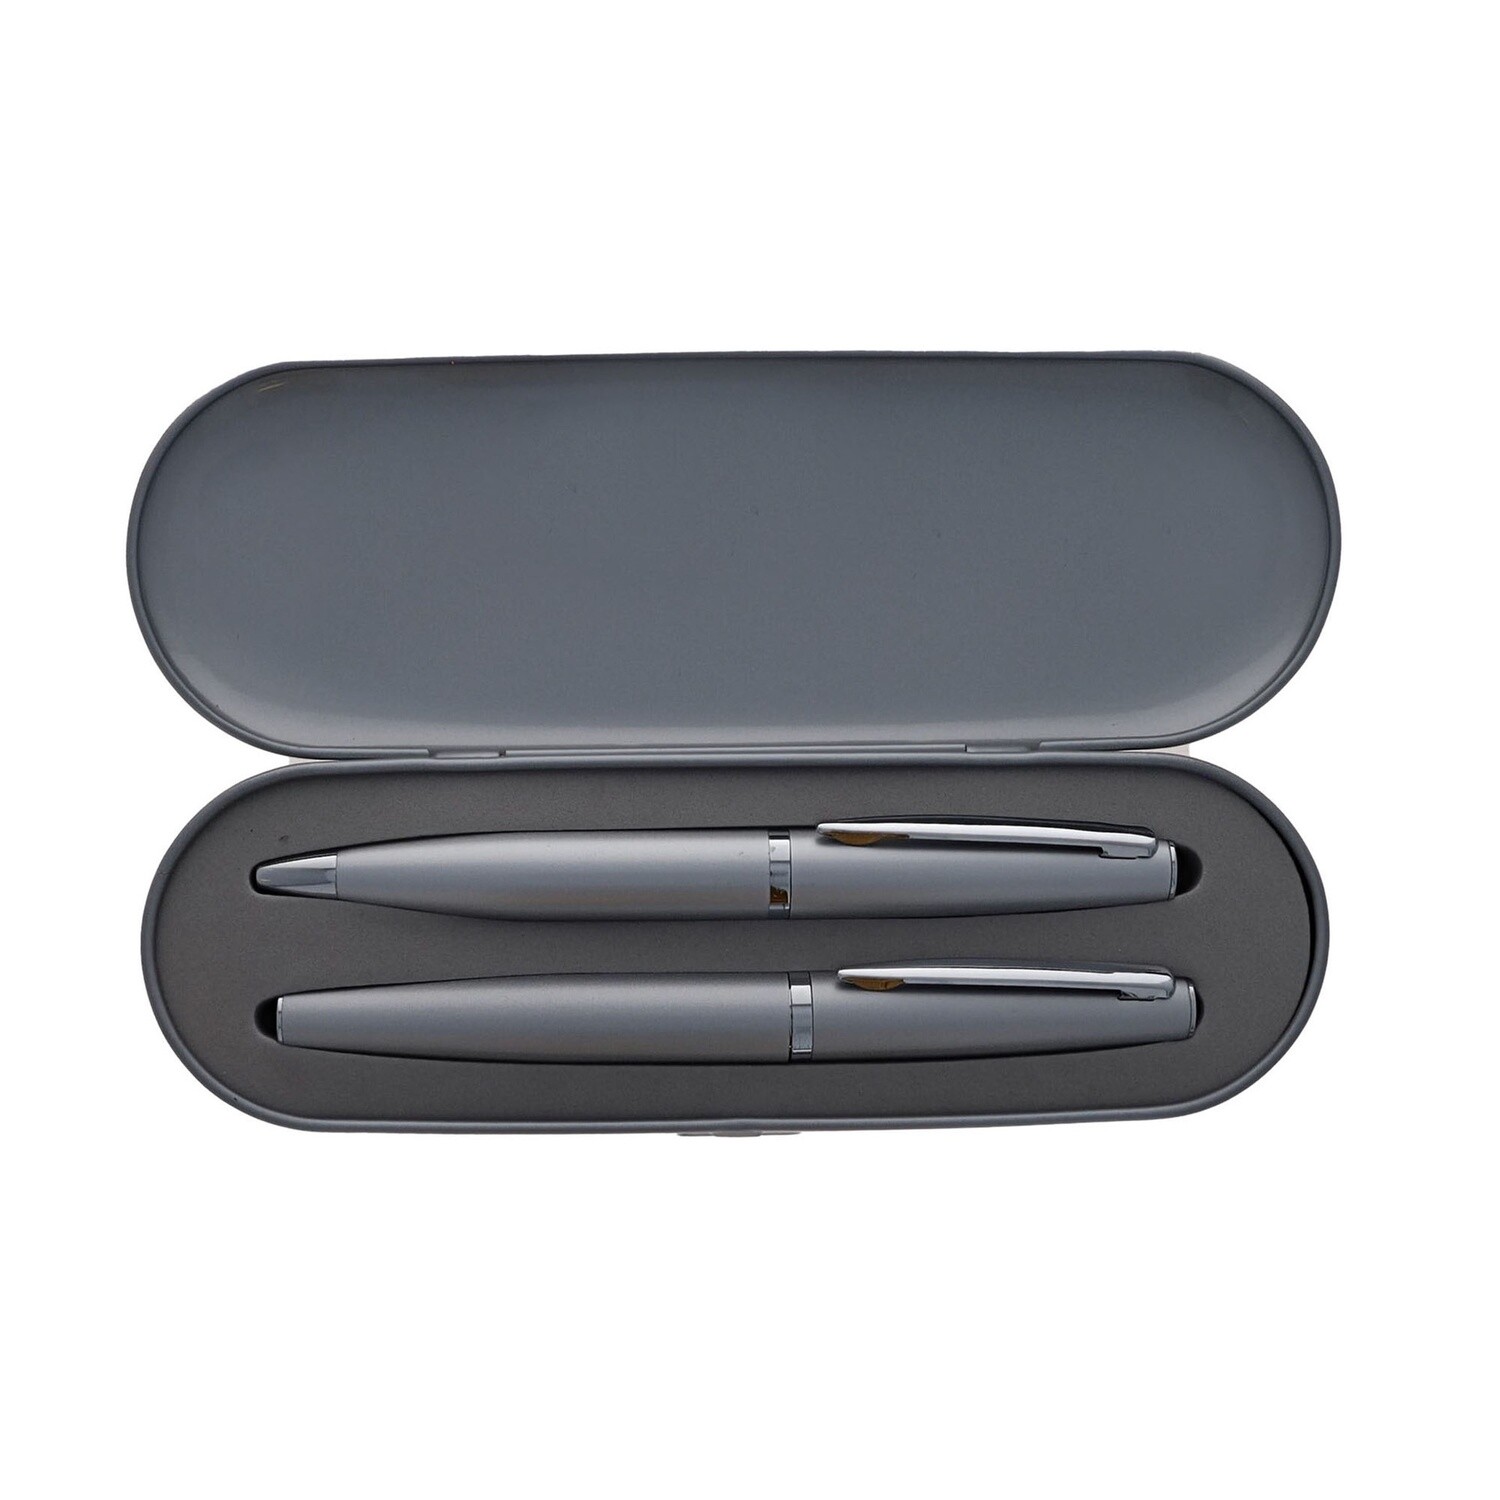 Pen Tin Box Set with State Seal in Satin Chrome